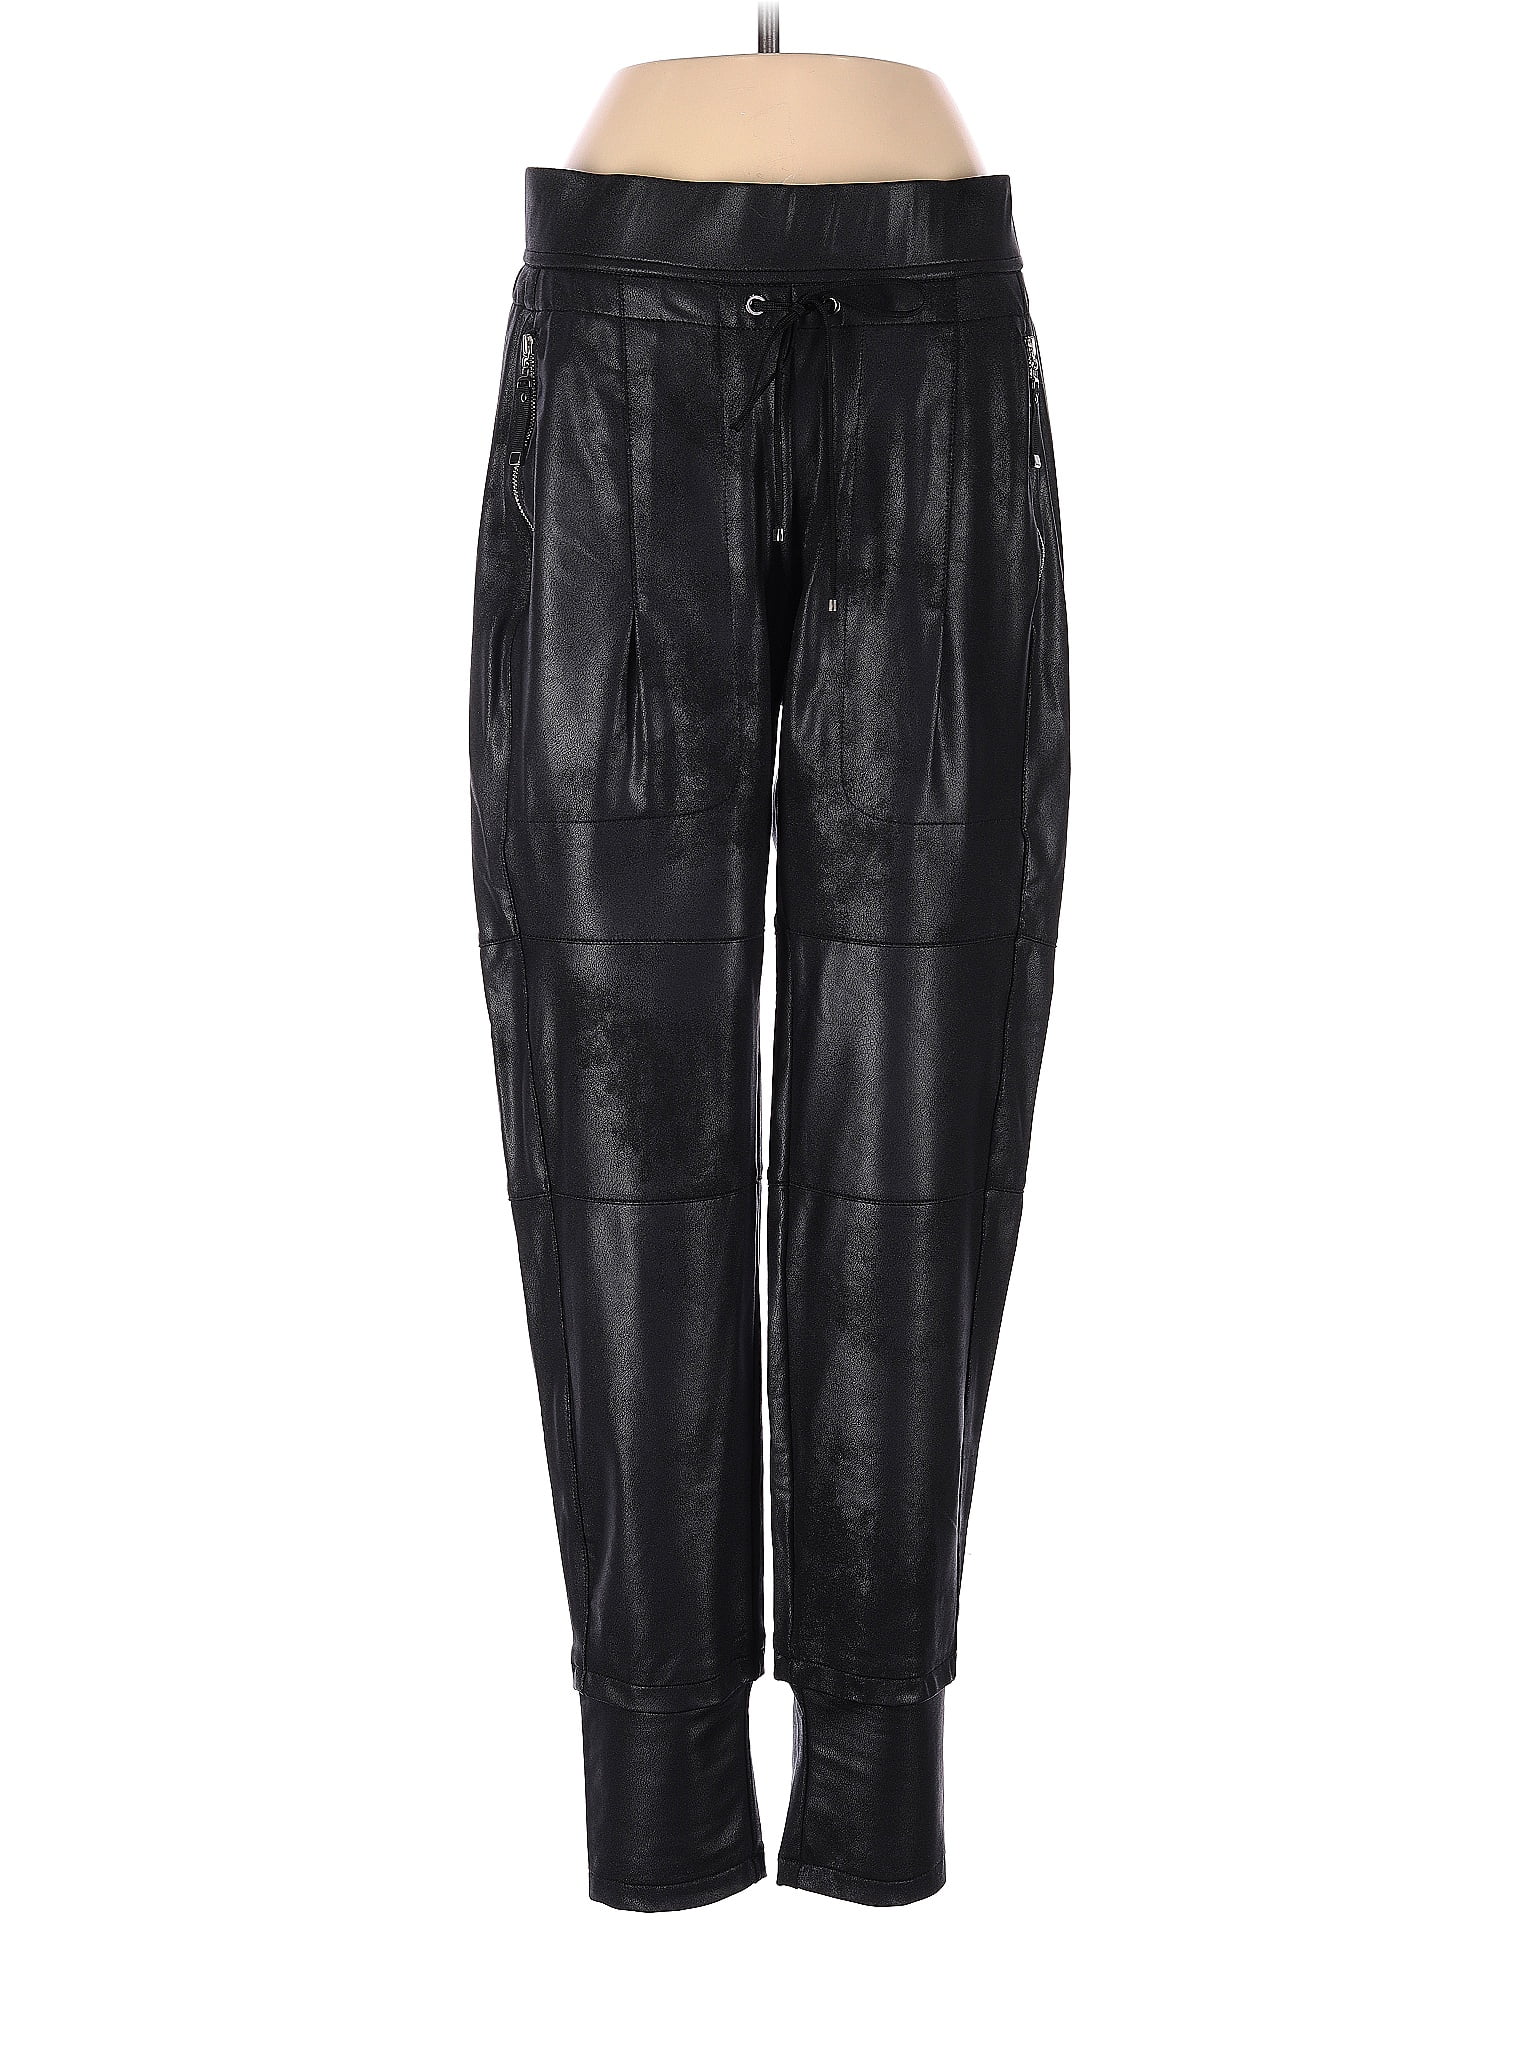 Raffaello Rossi Solid Black Faux Leather Pants Size 34 (EU) - 82% off ...